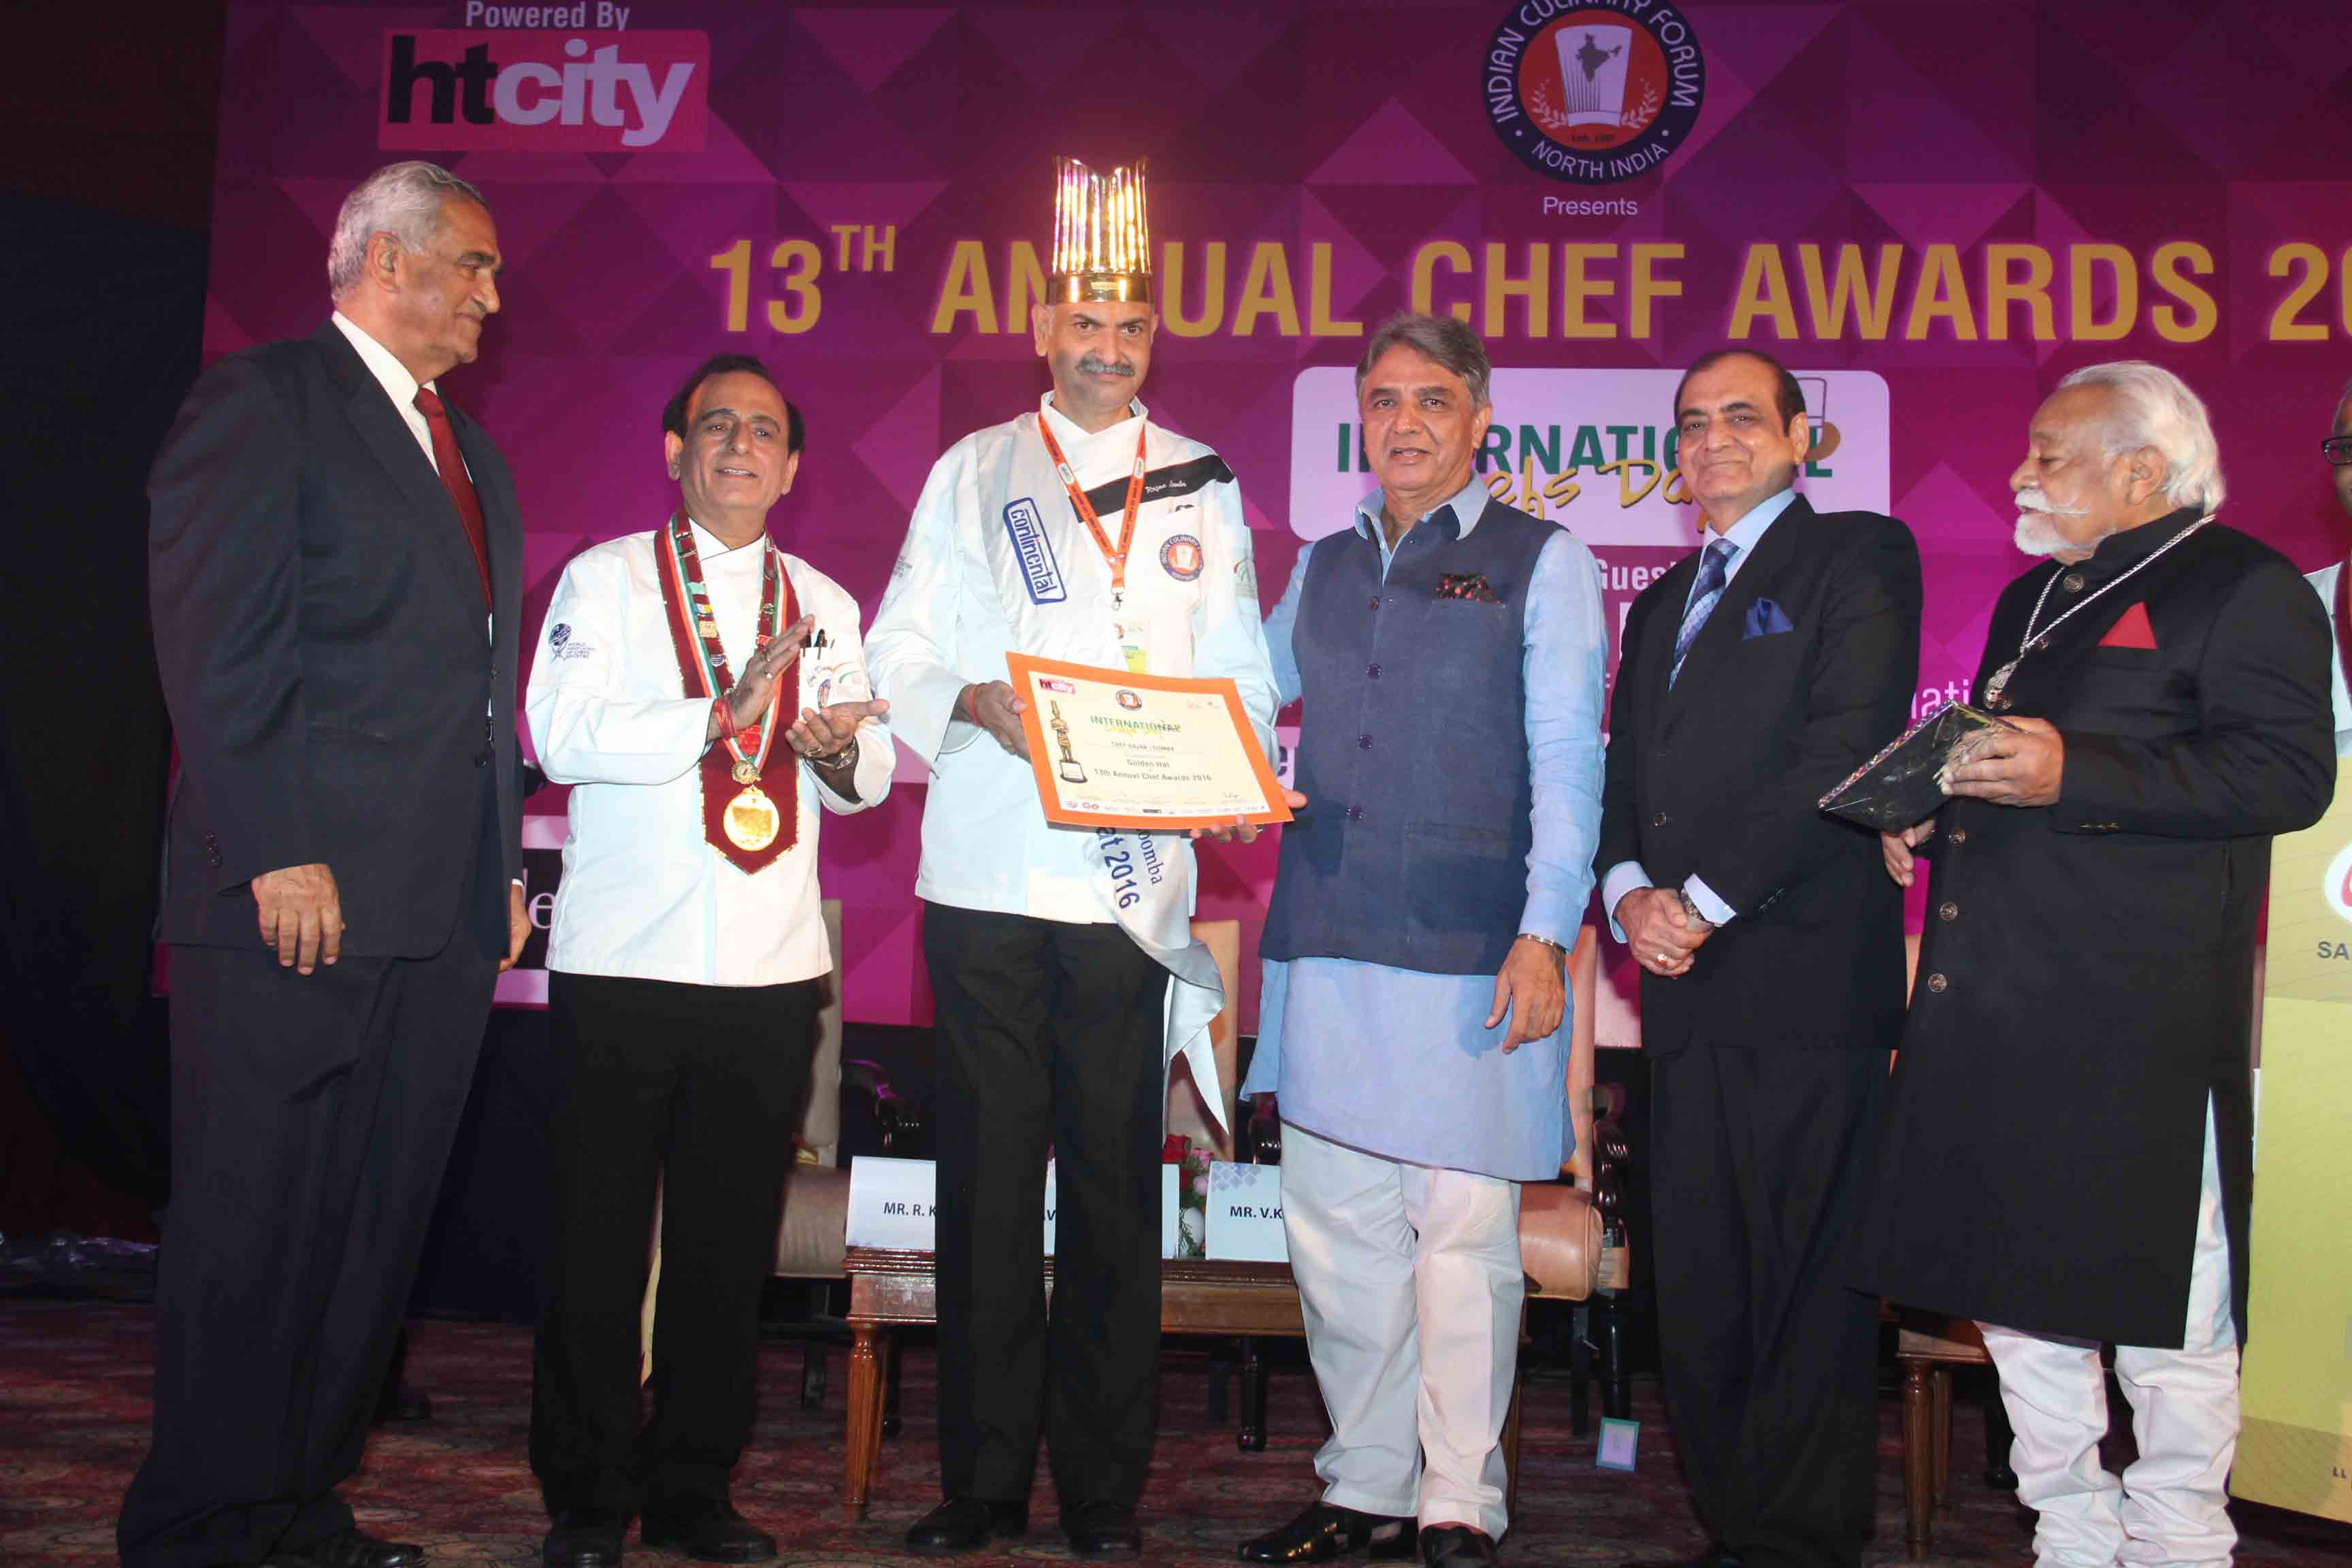 pic-mr-rajan-loomba-sr-executive-chef-the-ashokreceiving-award-from-shri-v-k-duggal